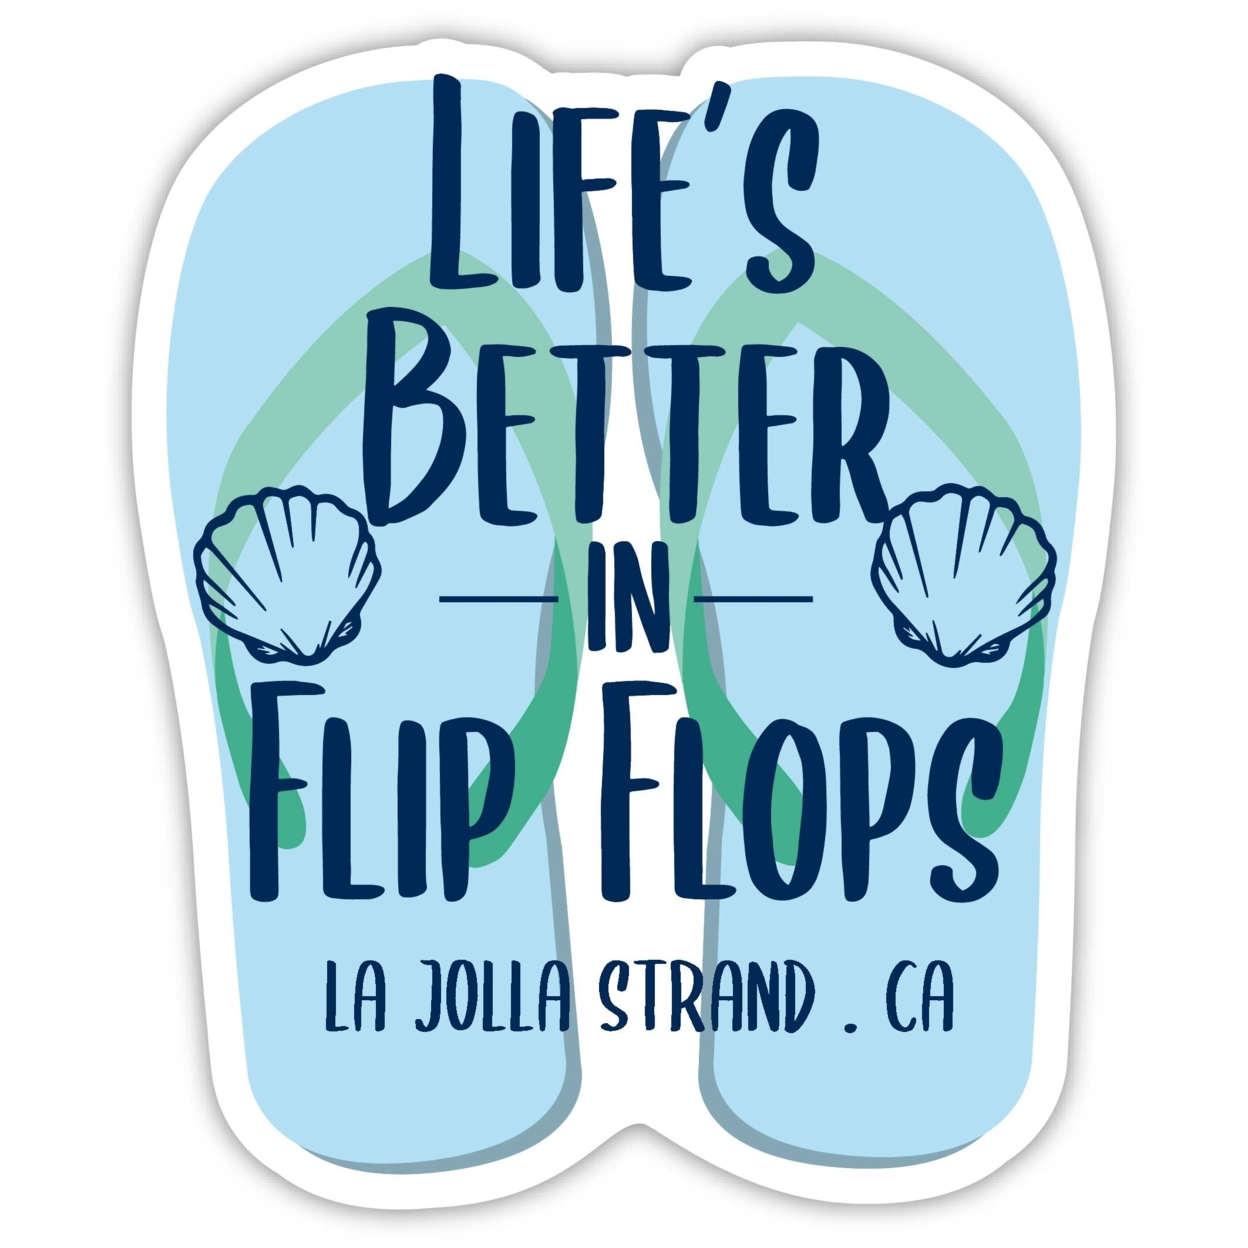 La Jolla Strand California Souvenir 4 Inch Vinyl Decal Sticker Flip Flop Design